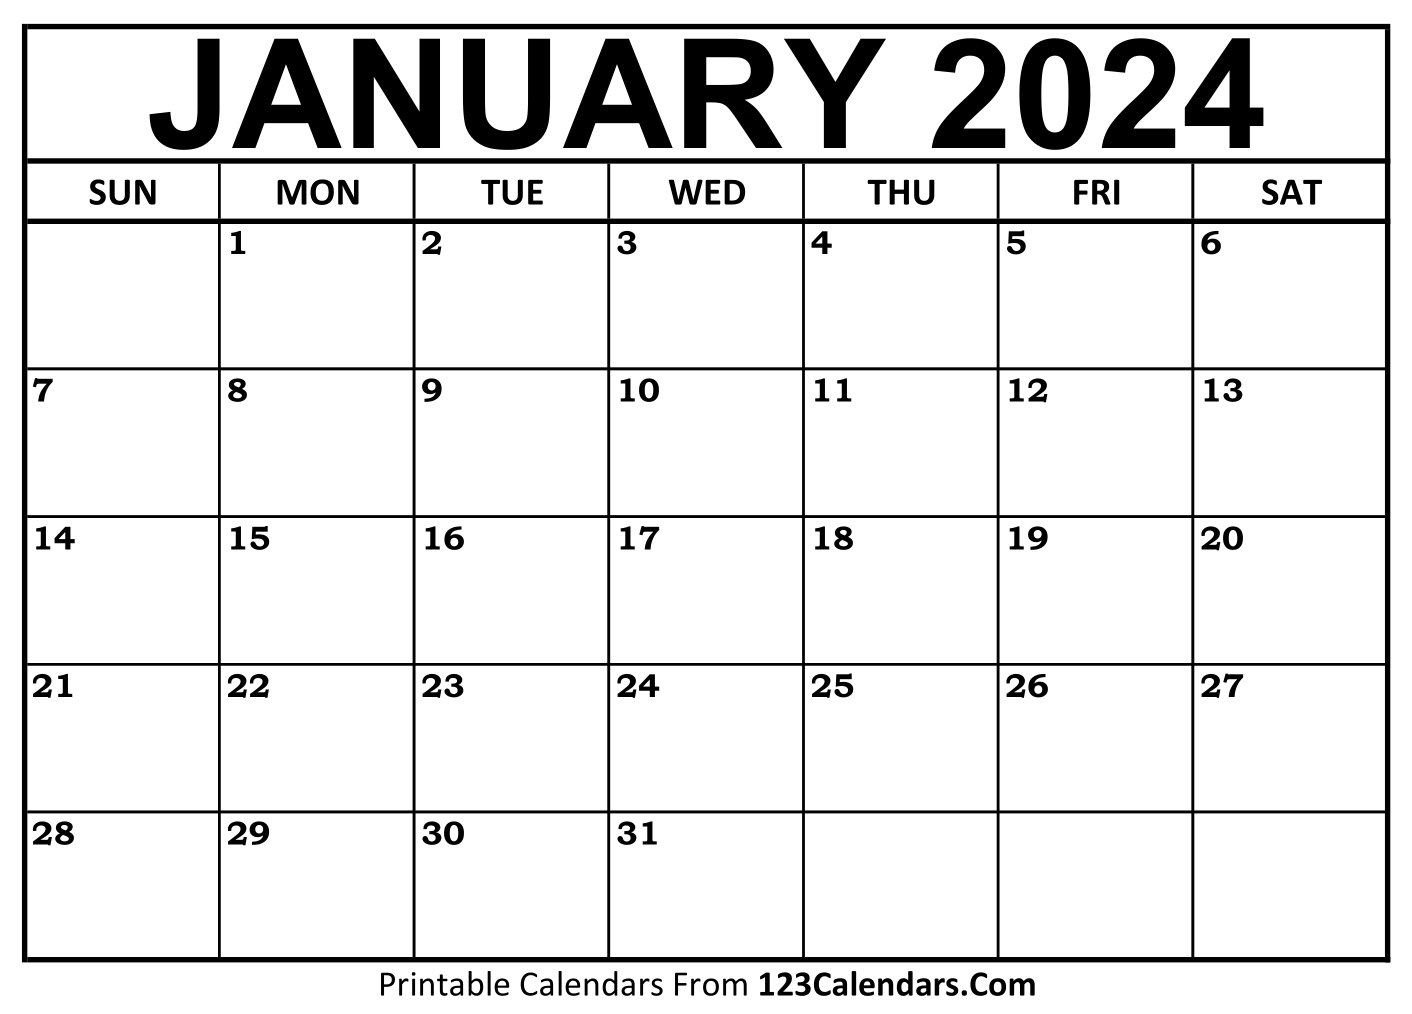 Printable January 2024 Calendar Templates - 123Calendars | 2024 Free Printable Calendars